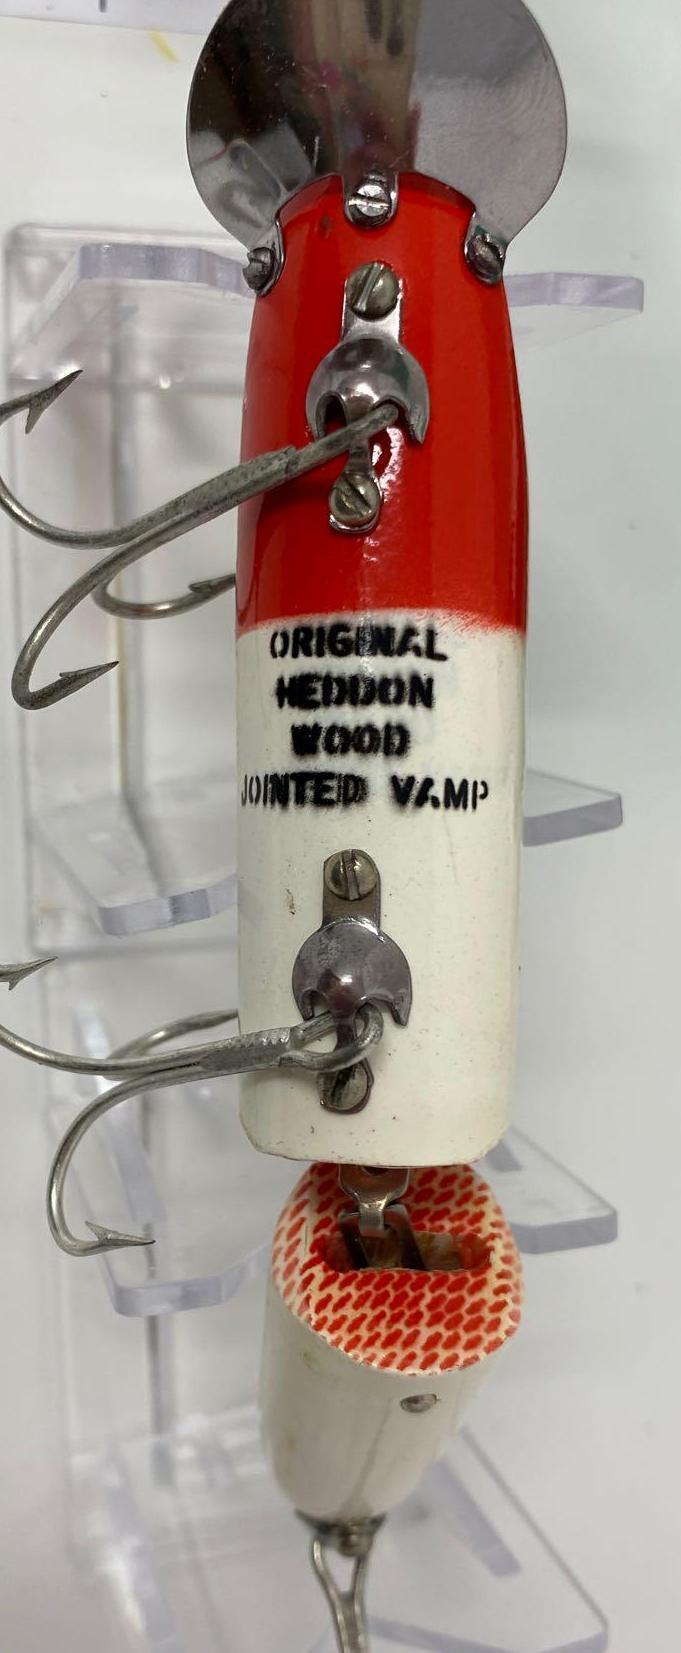 Two Original Heddon Wood Jointed Vamp Lures